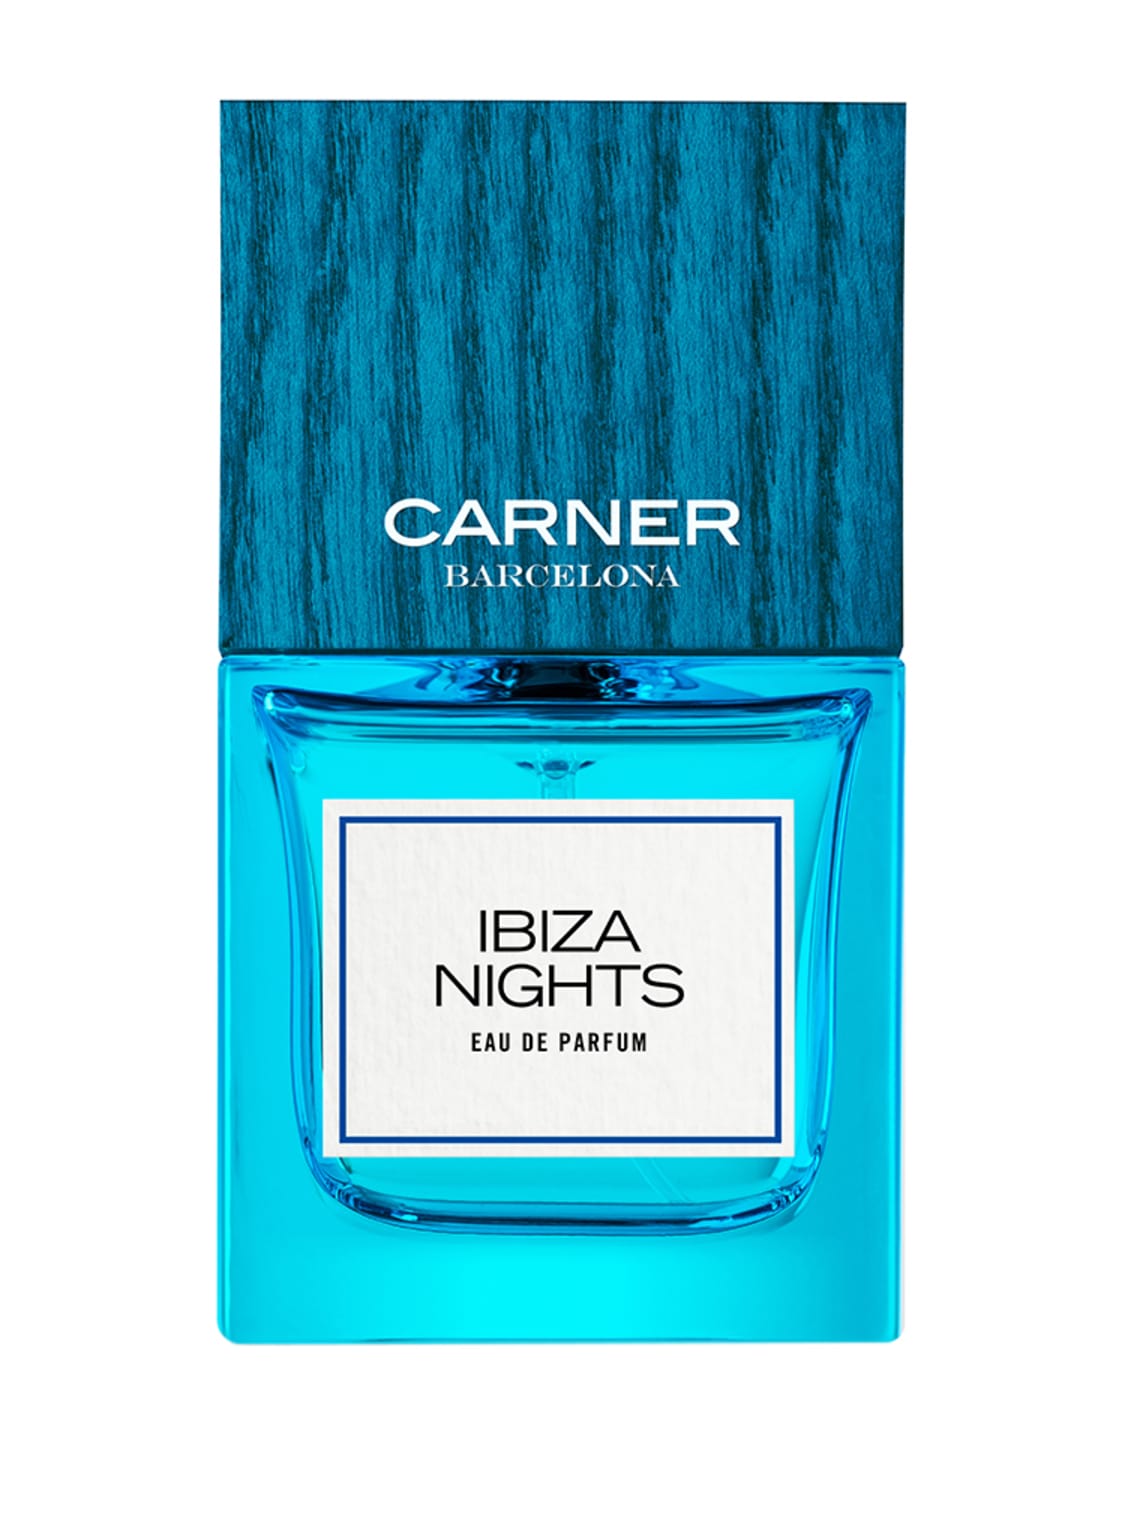 Carner Barcelona Ibiza Nights Eau de Parfum 100 ml von CARNER BARCELONA